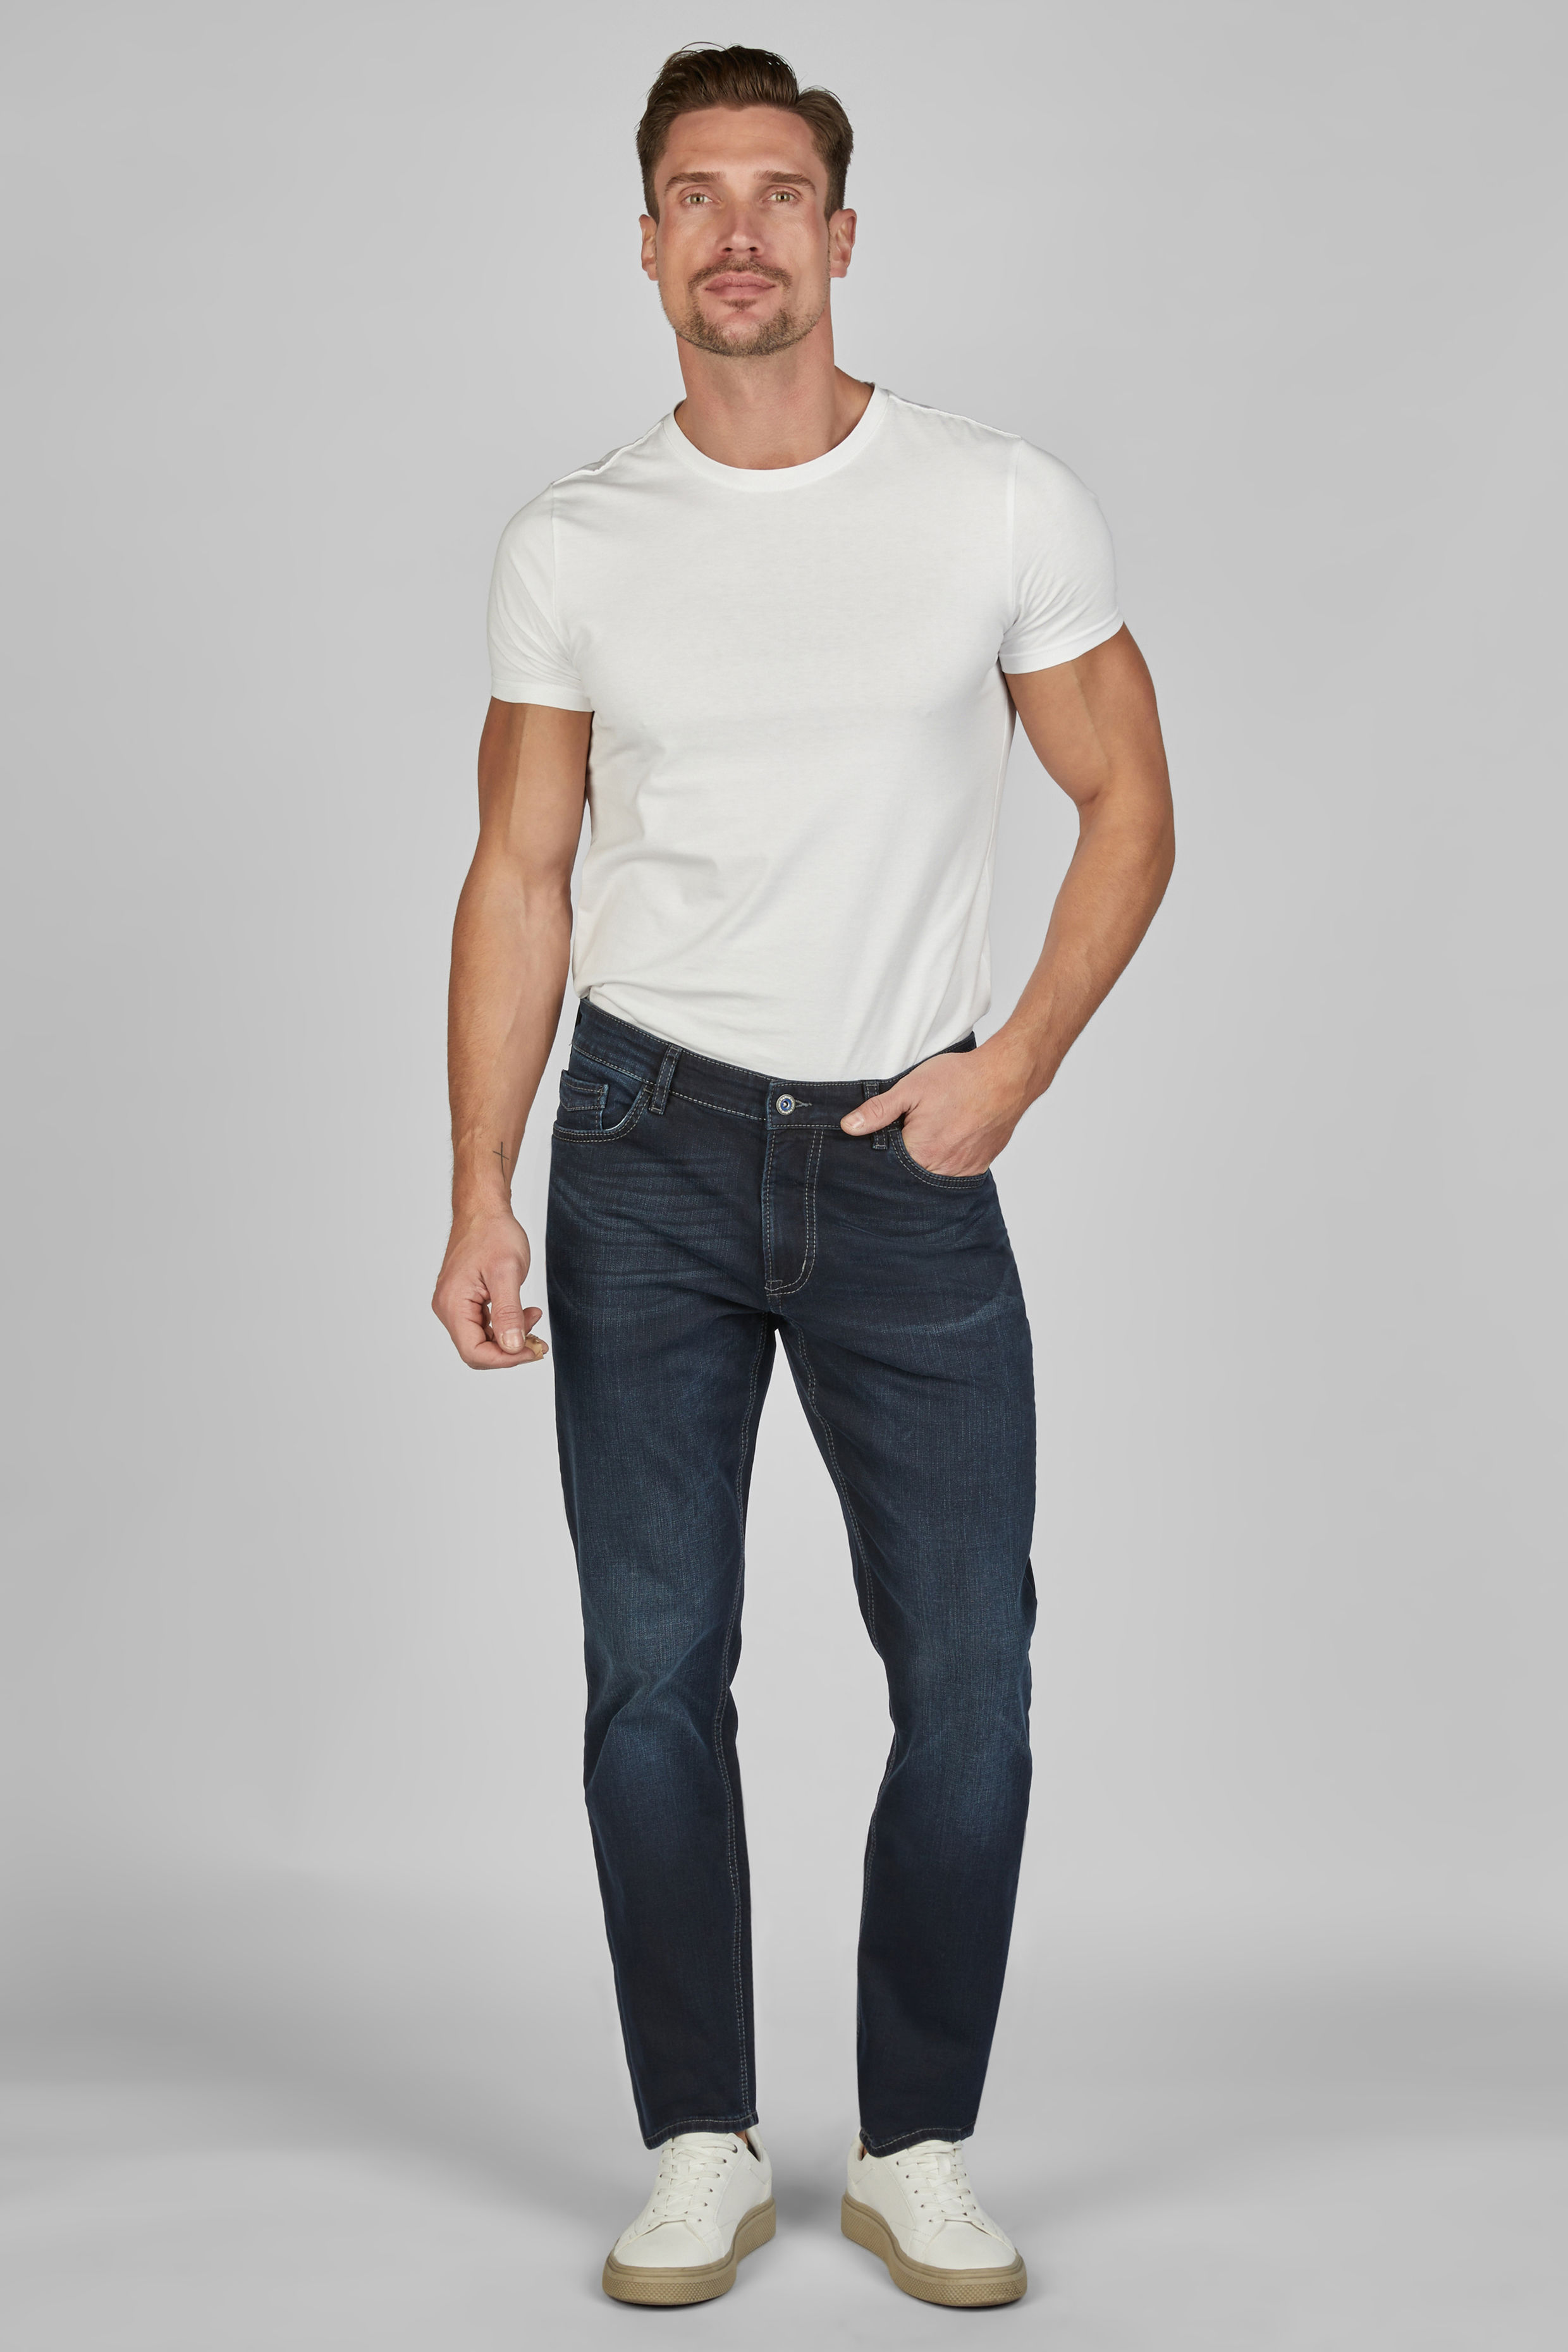 Denim Hunter Jeans - 31 THE CELINAZIP CUSTOM, Medium Grey Wash